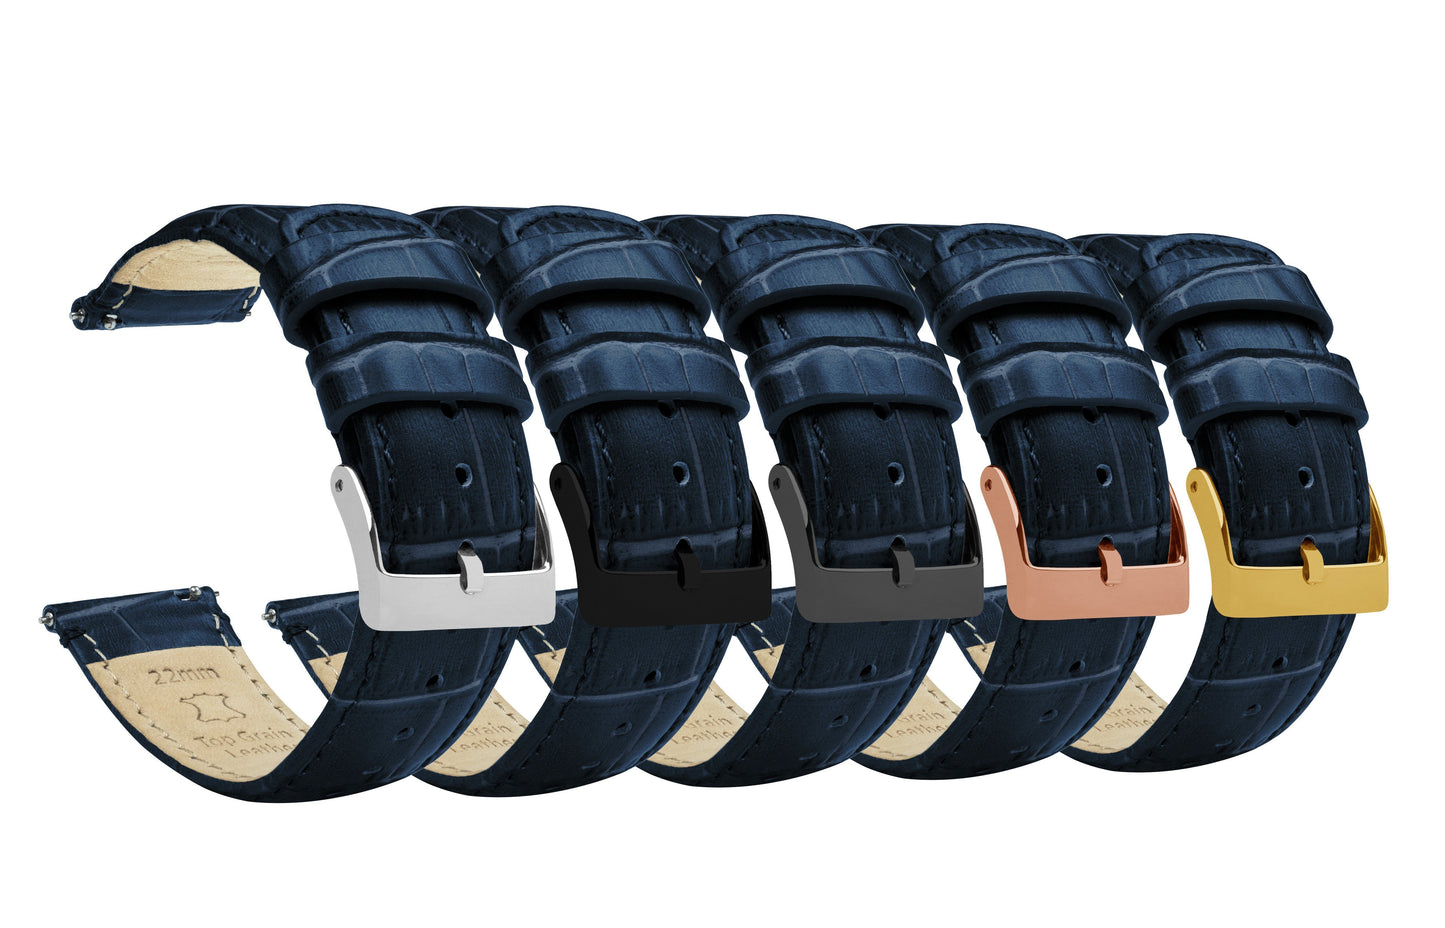 Navy Blue | Alligator Grain Leather - Barton Watch Bands